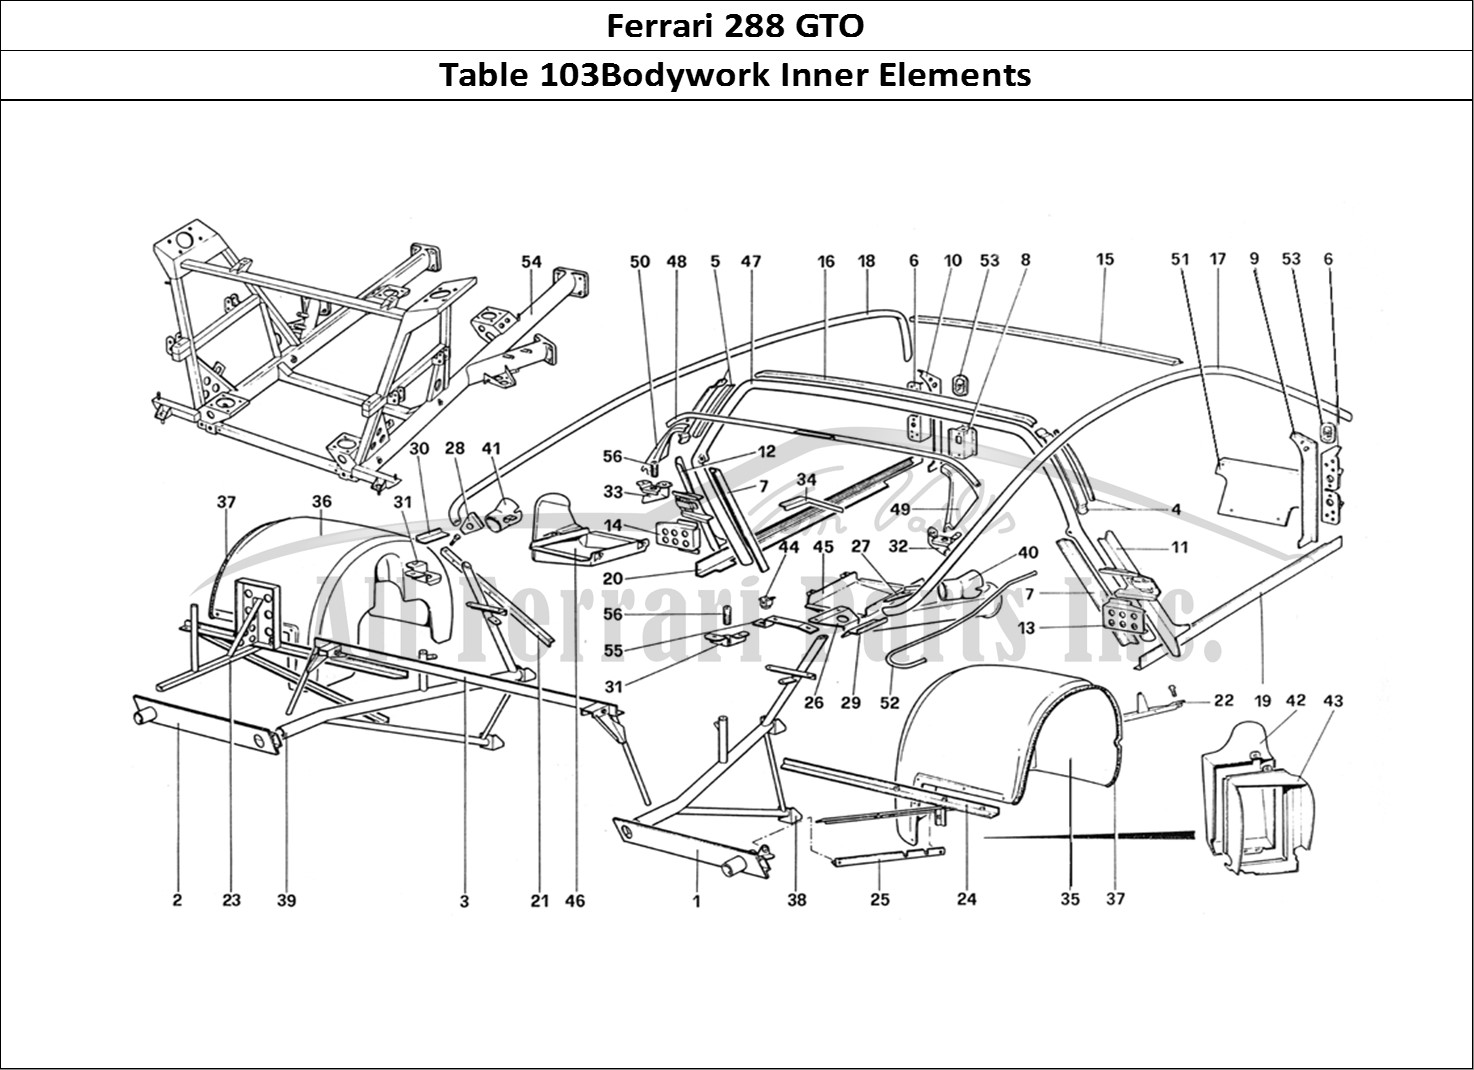 Ferrari Parts Ferrari 288 GTO Page 103 Body Shell - Inner Elemen